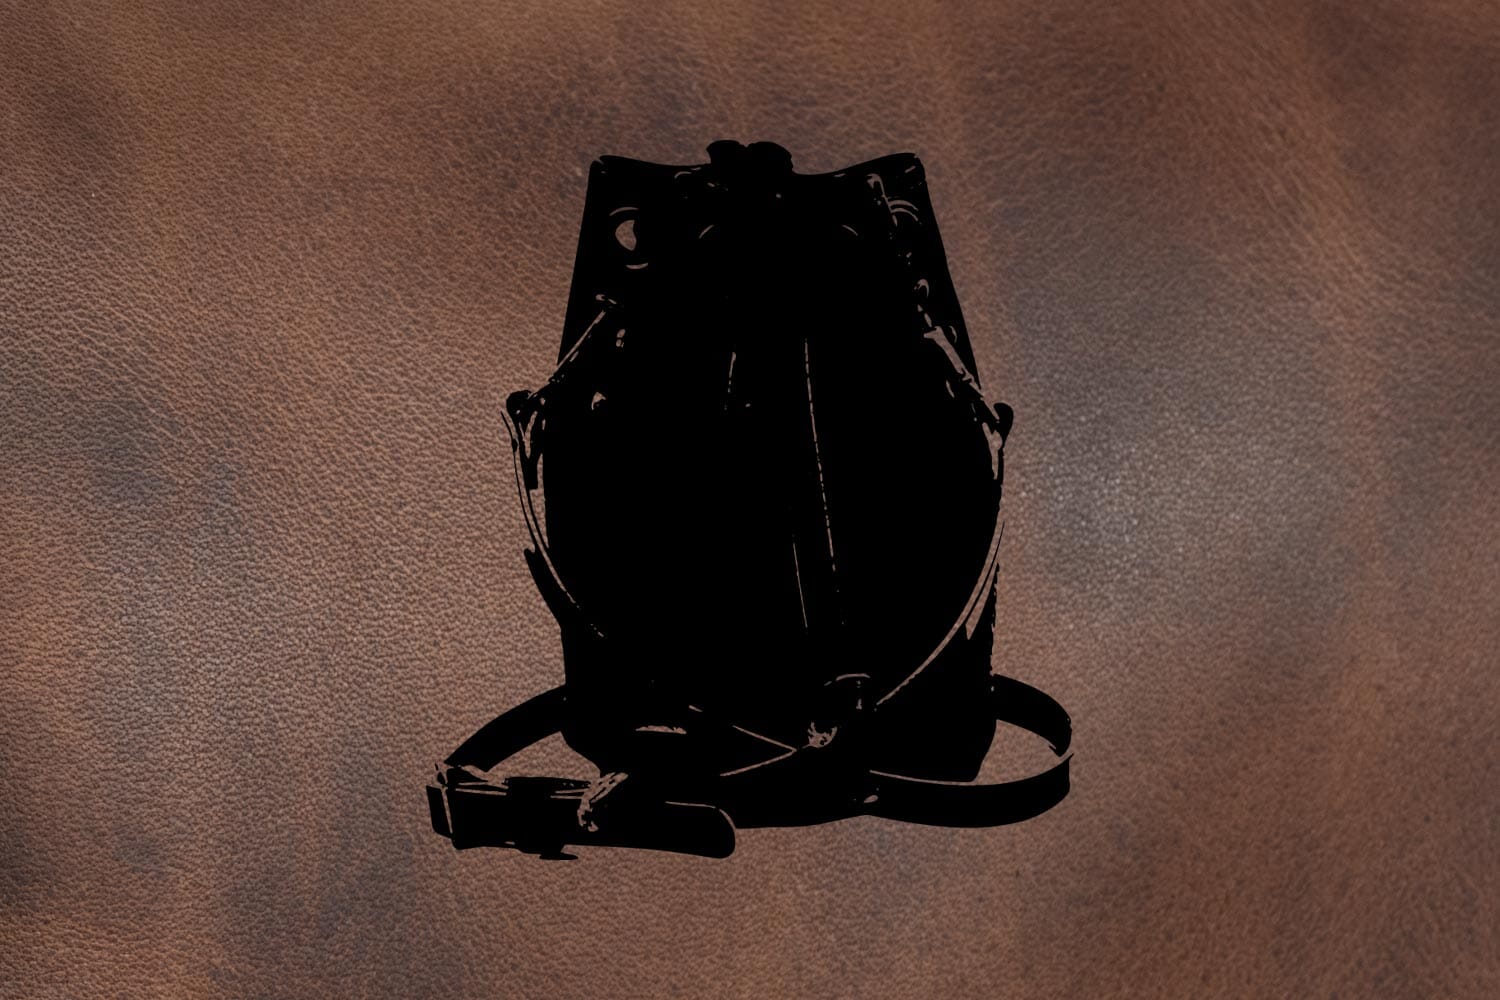 Leather Bucket Bag - Small - Rustic Pecan